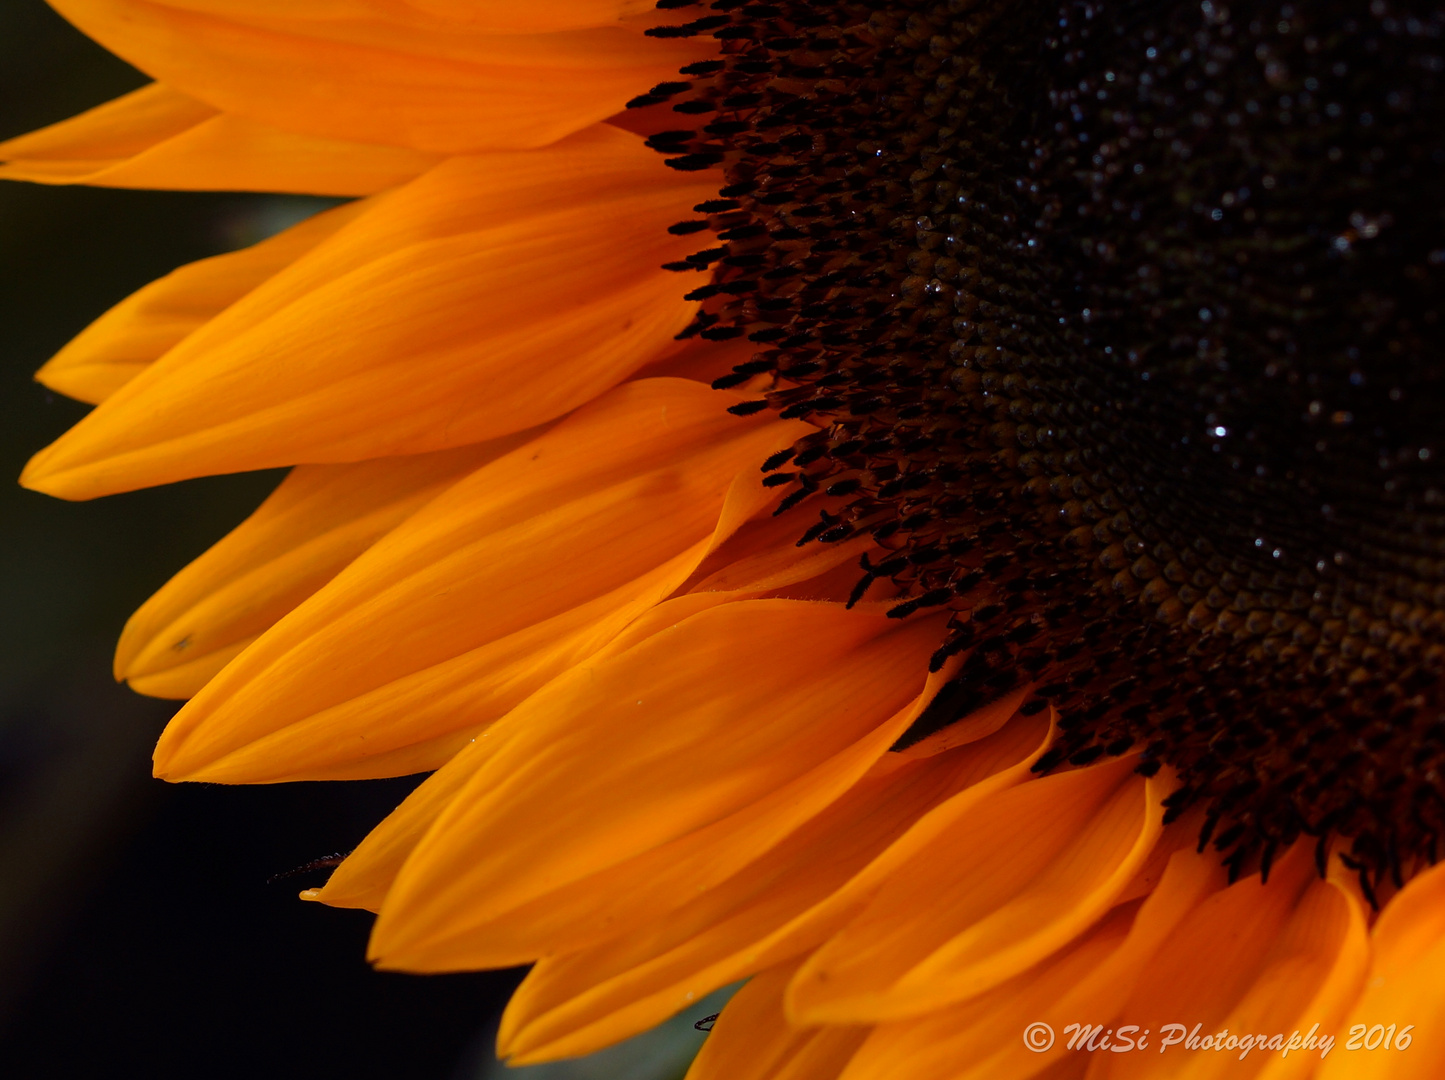 Sonnenblume / sunflower